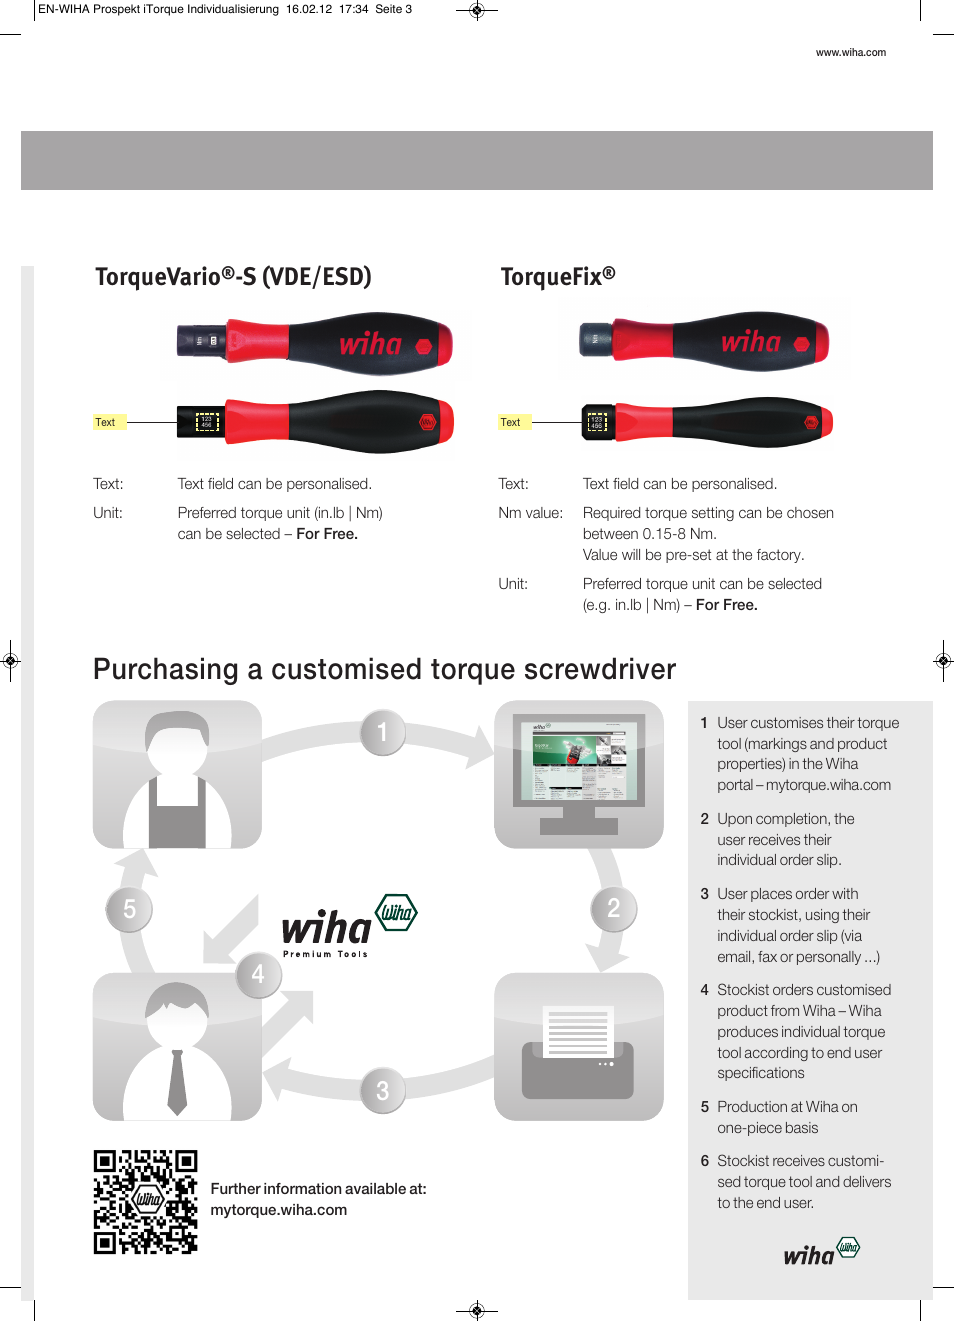 Purchasing a customised torque screwdriver, Torquevario, S (vde/esd) torquefix | Wiha Tools iTorque Individualisation User Manual | Page 3 / 4